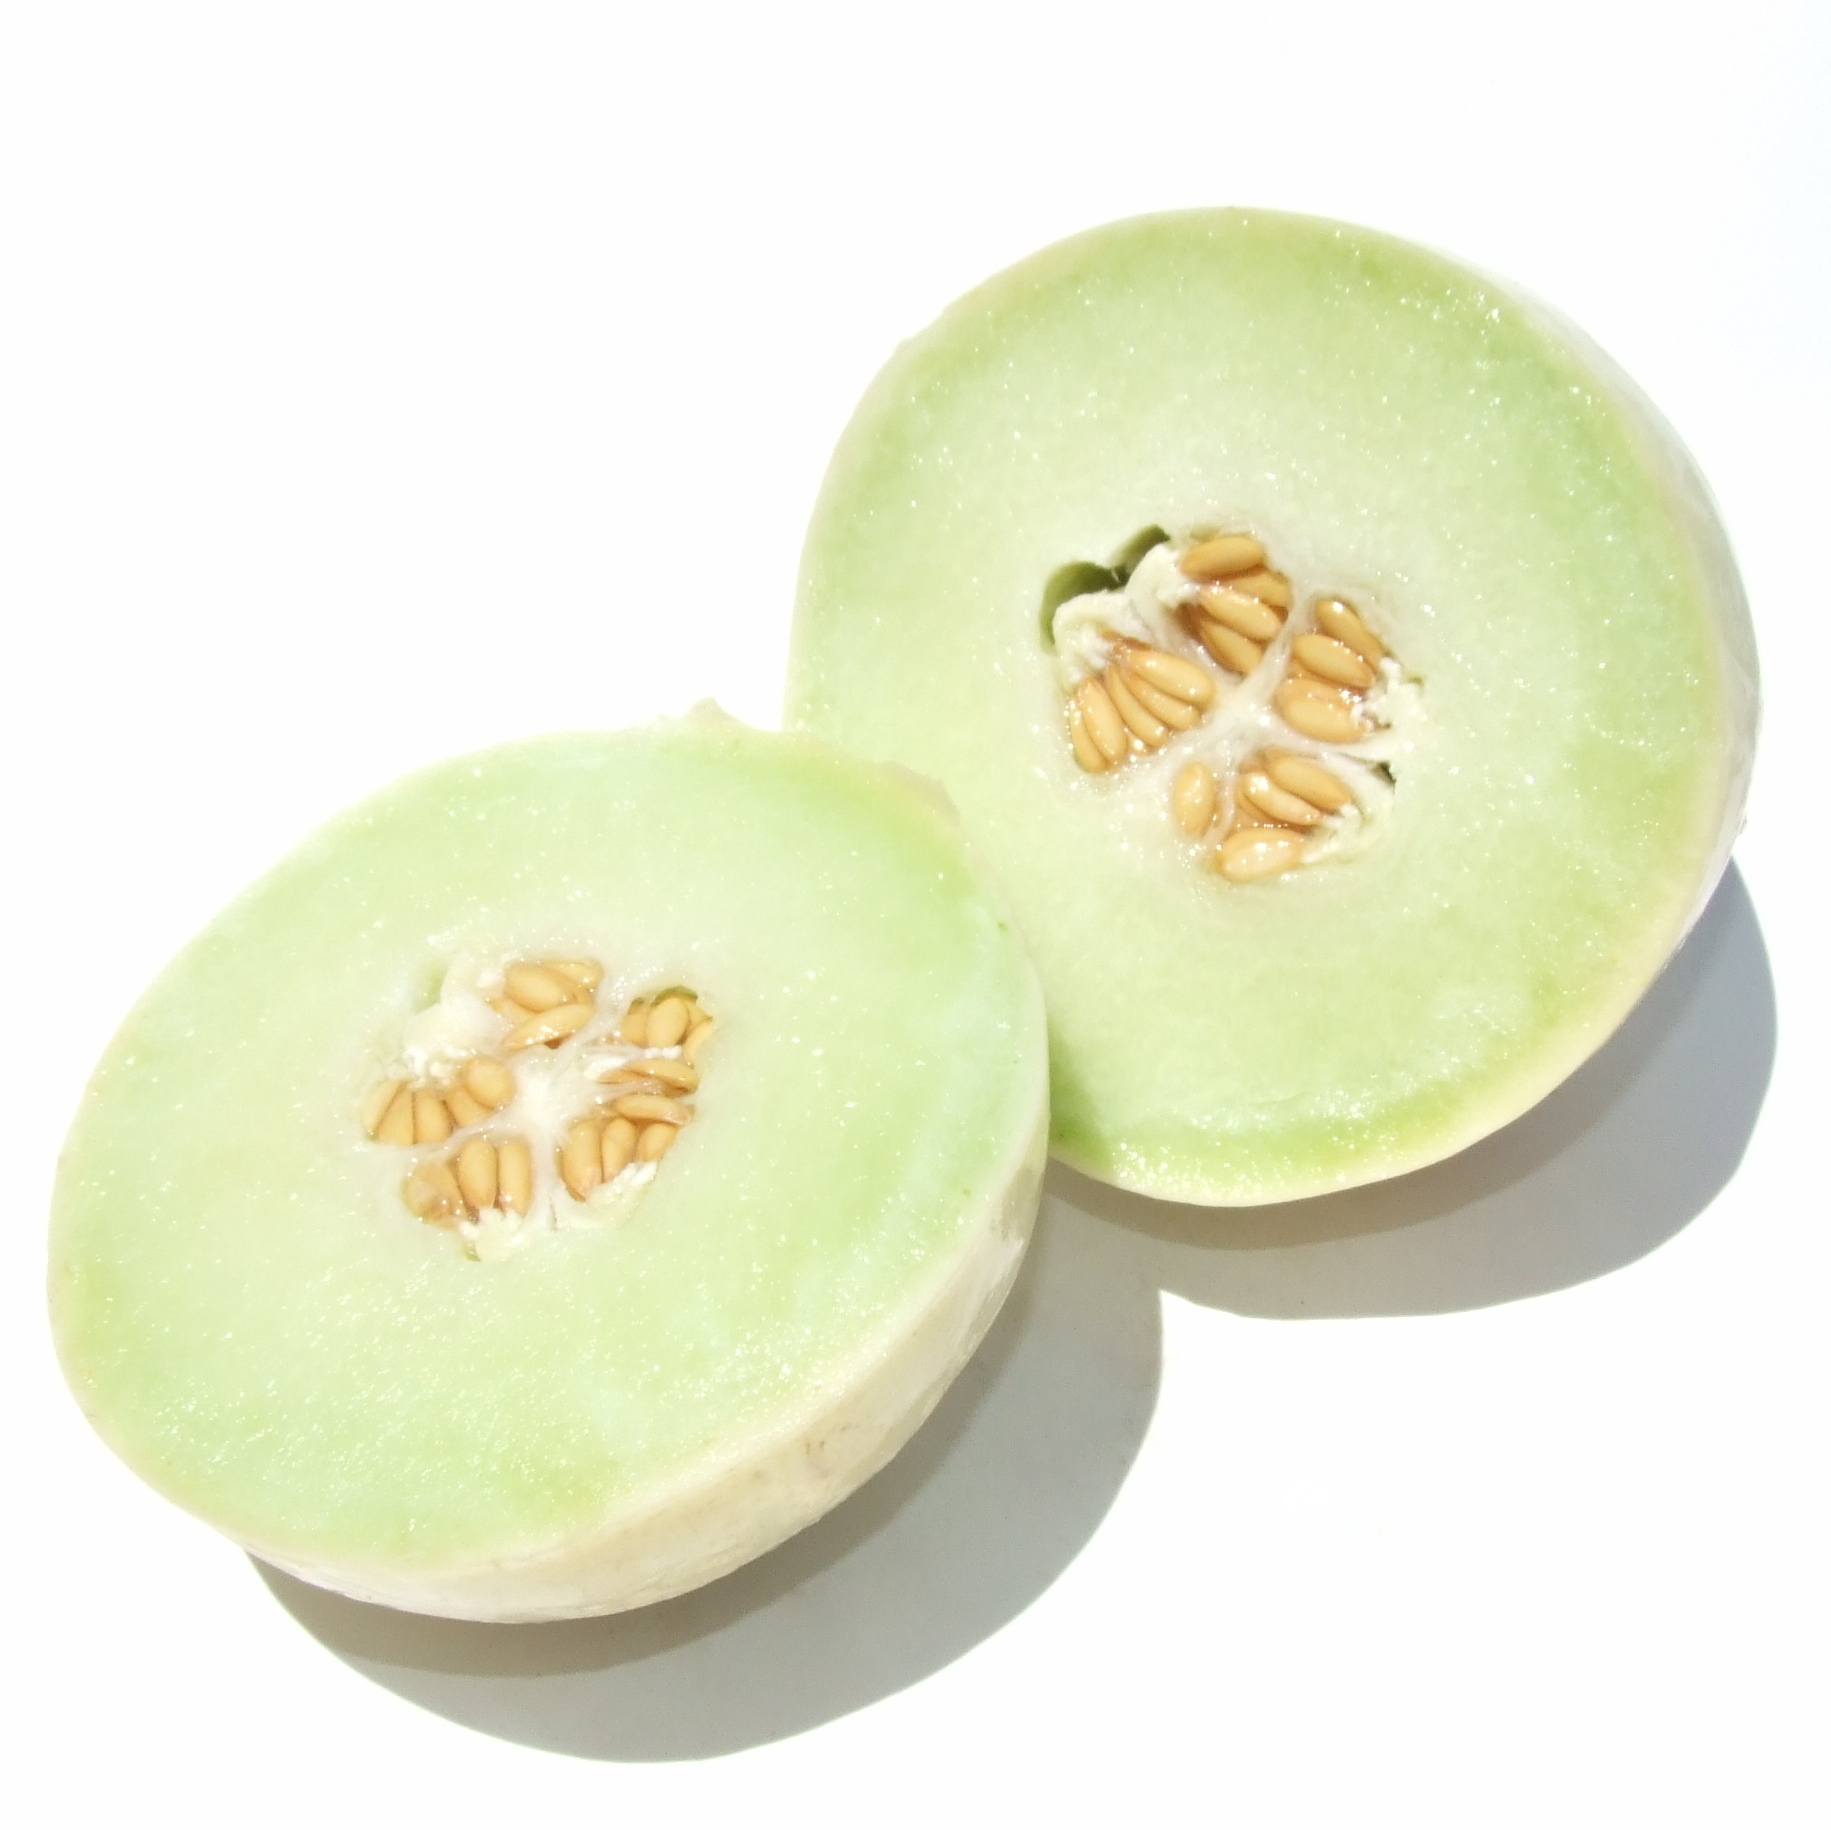 Buy Honeydew Melon online, Buy fresh Honeydew Melon Brisbane